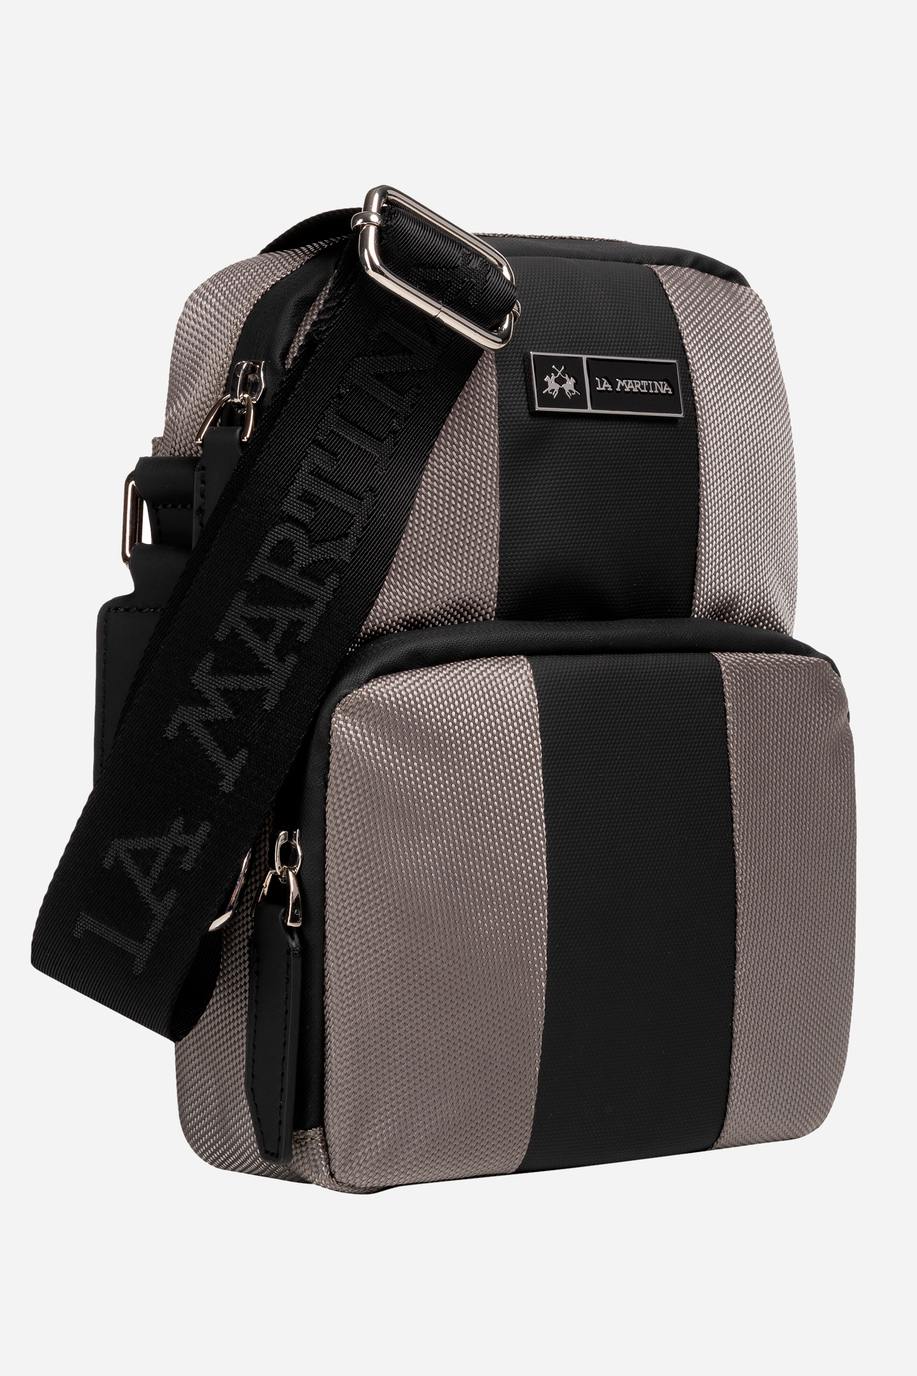 Bodybag aus Polyestergewebe - Accessoires | La Martina - Official Online Shop